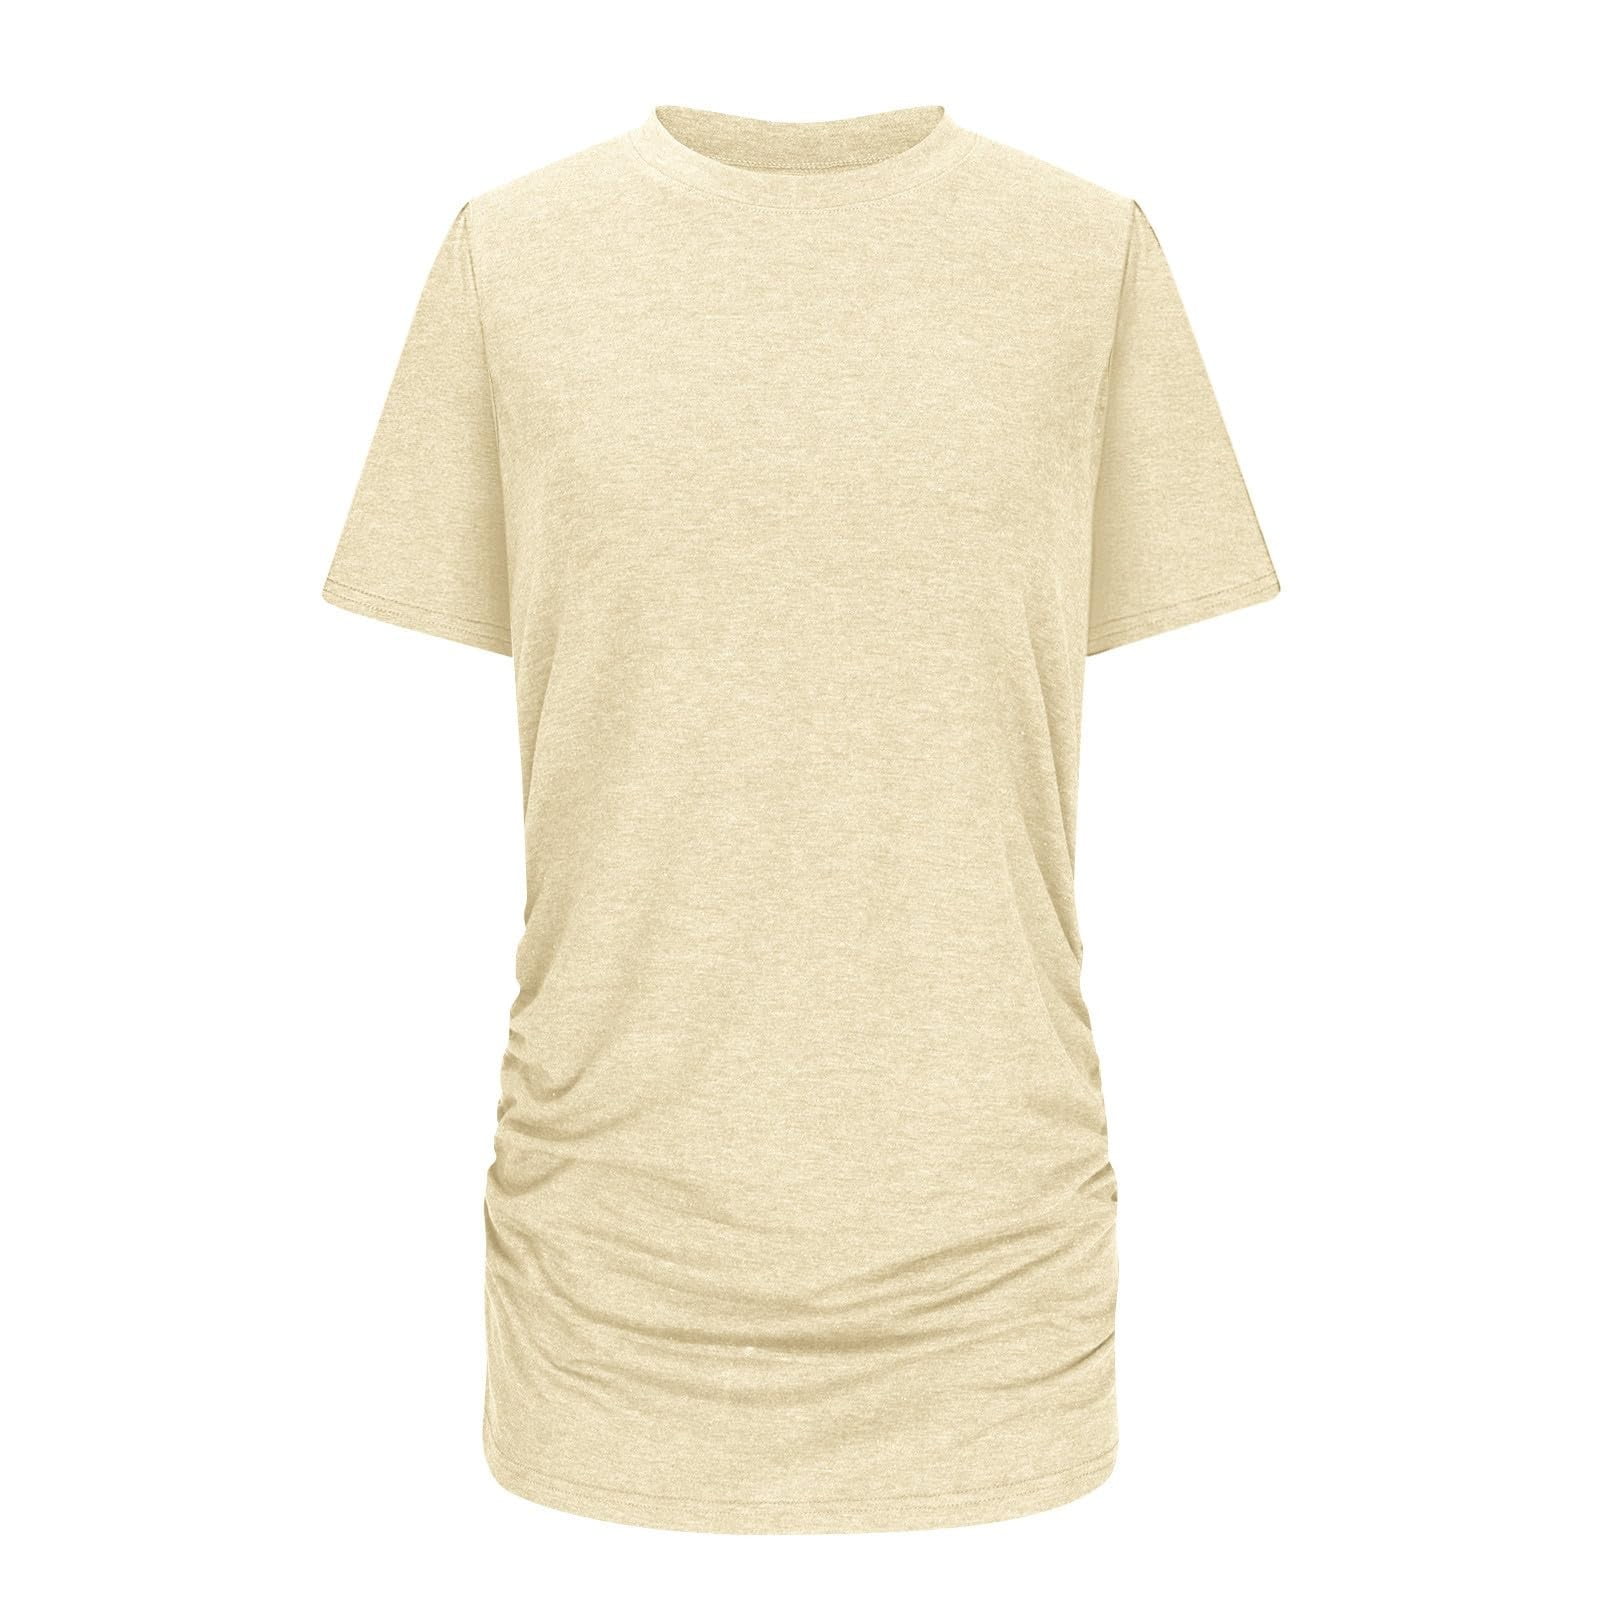 skfvkab T Shirt Top For Women Solid Color Short Sleeve Blouses Crewneck ...